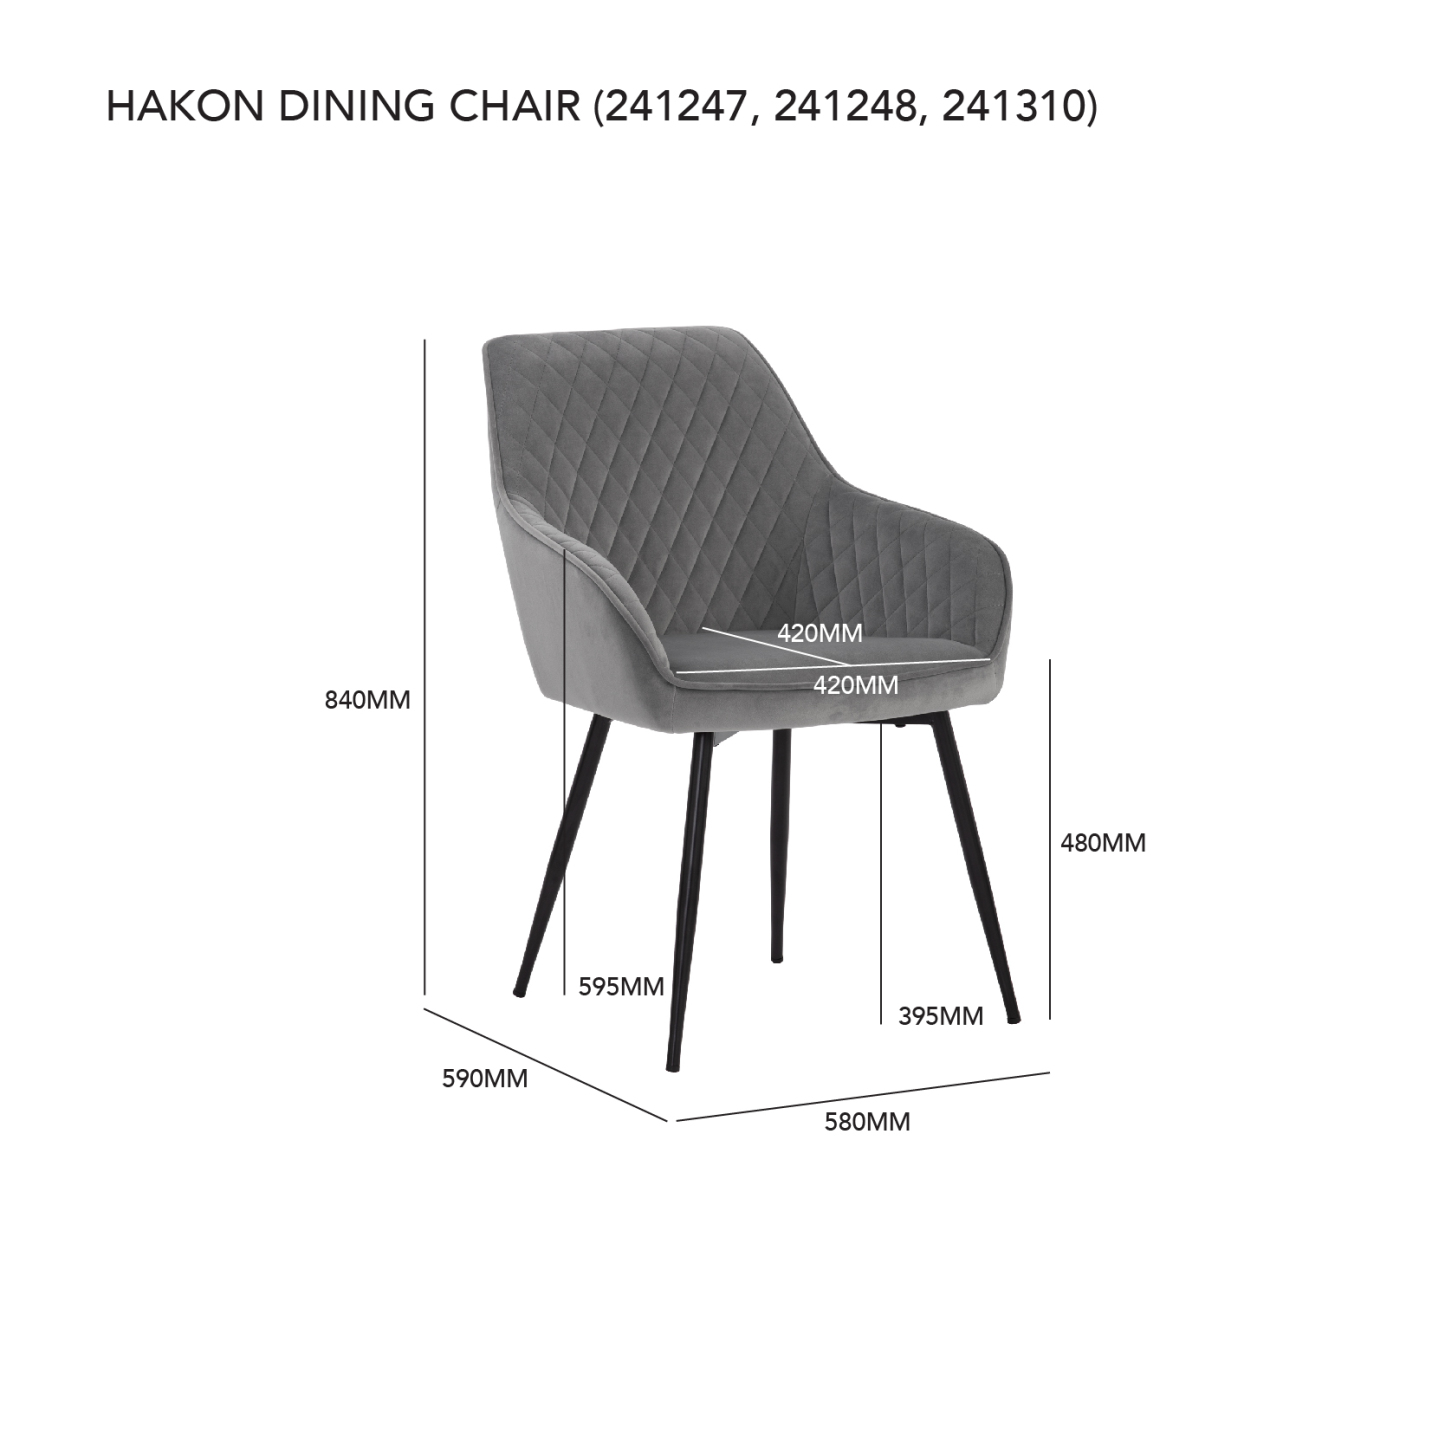 HAKO DINING CHAIR 802/3606